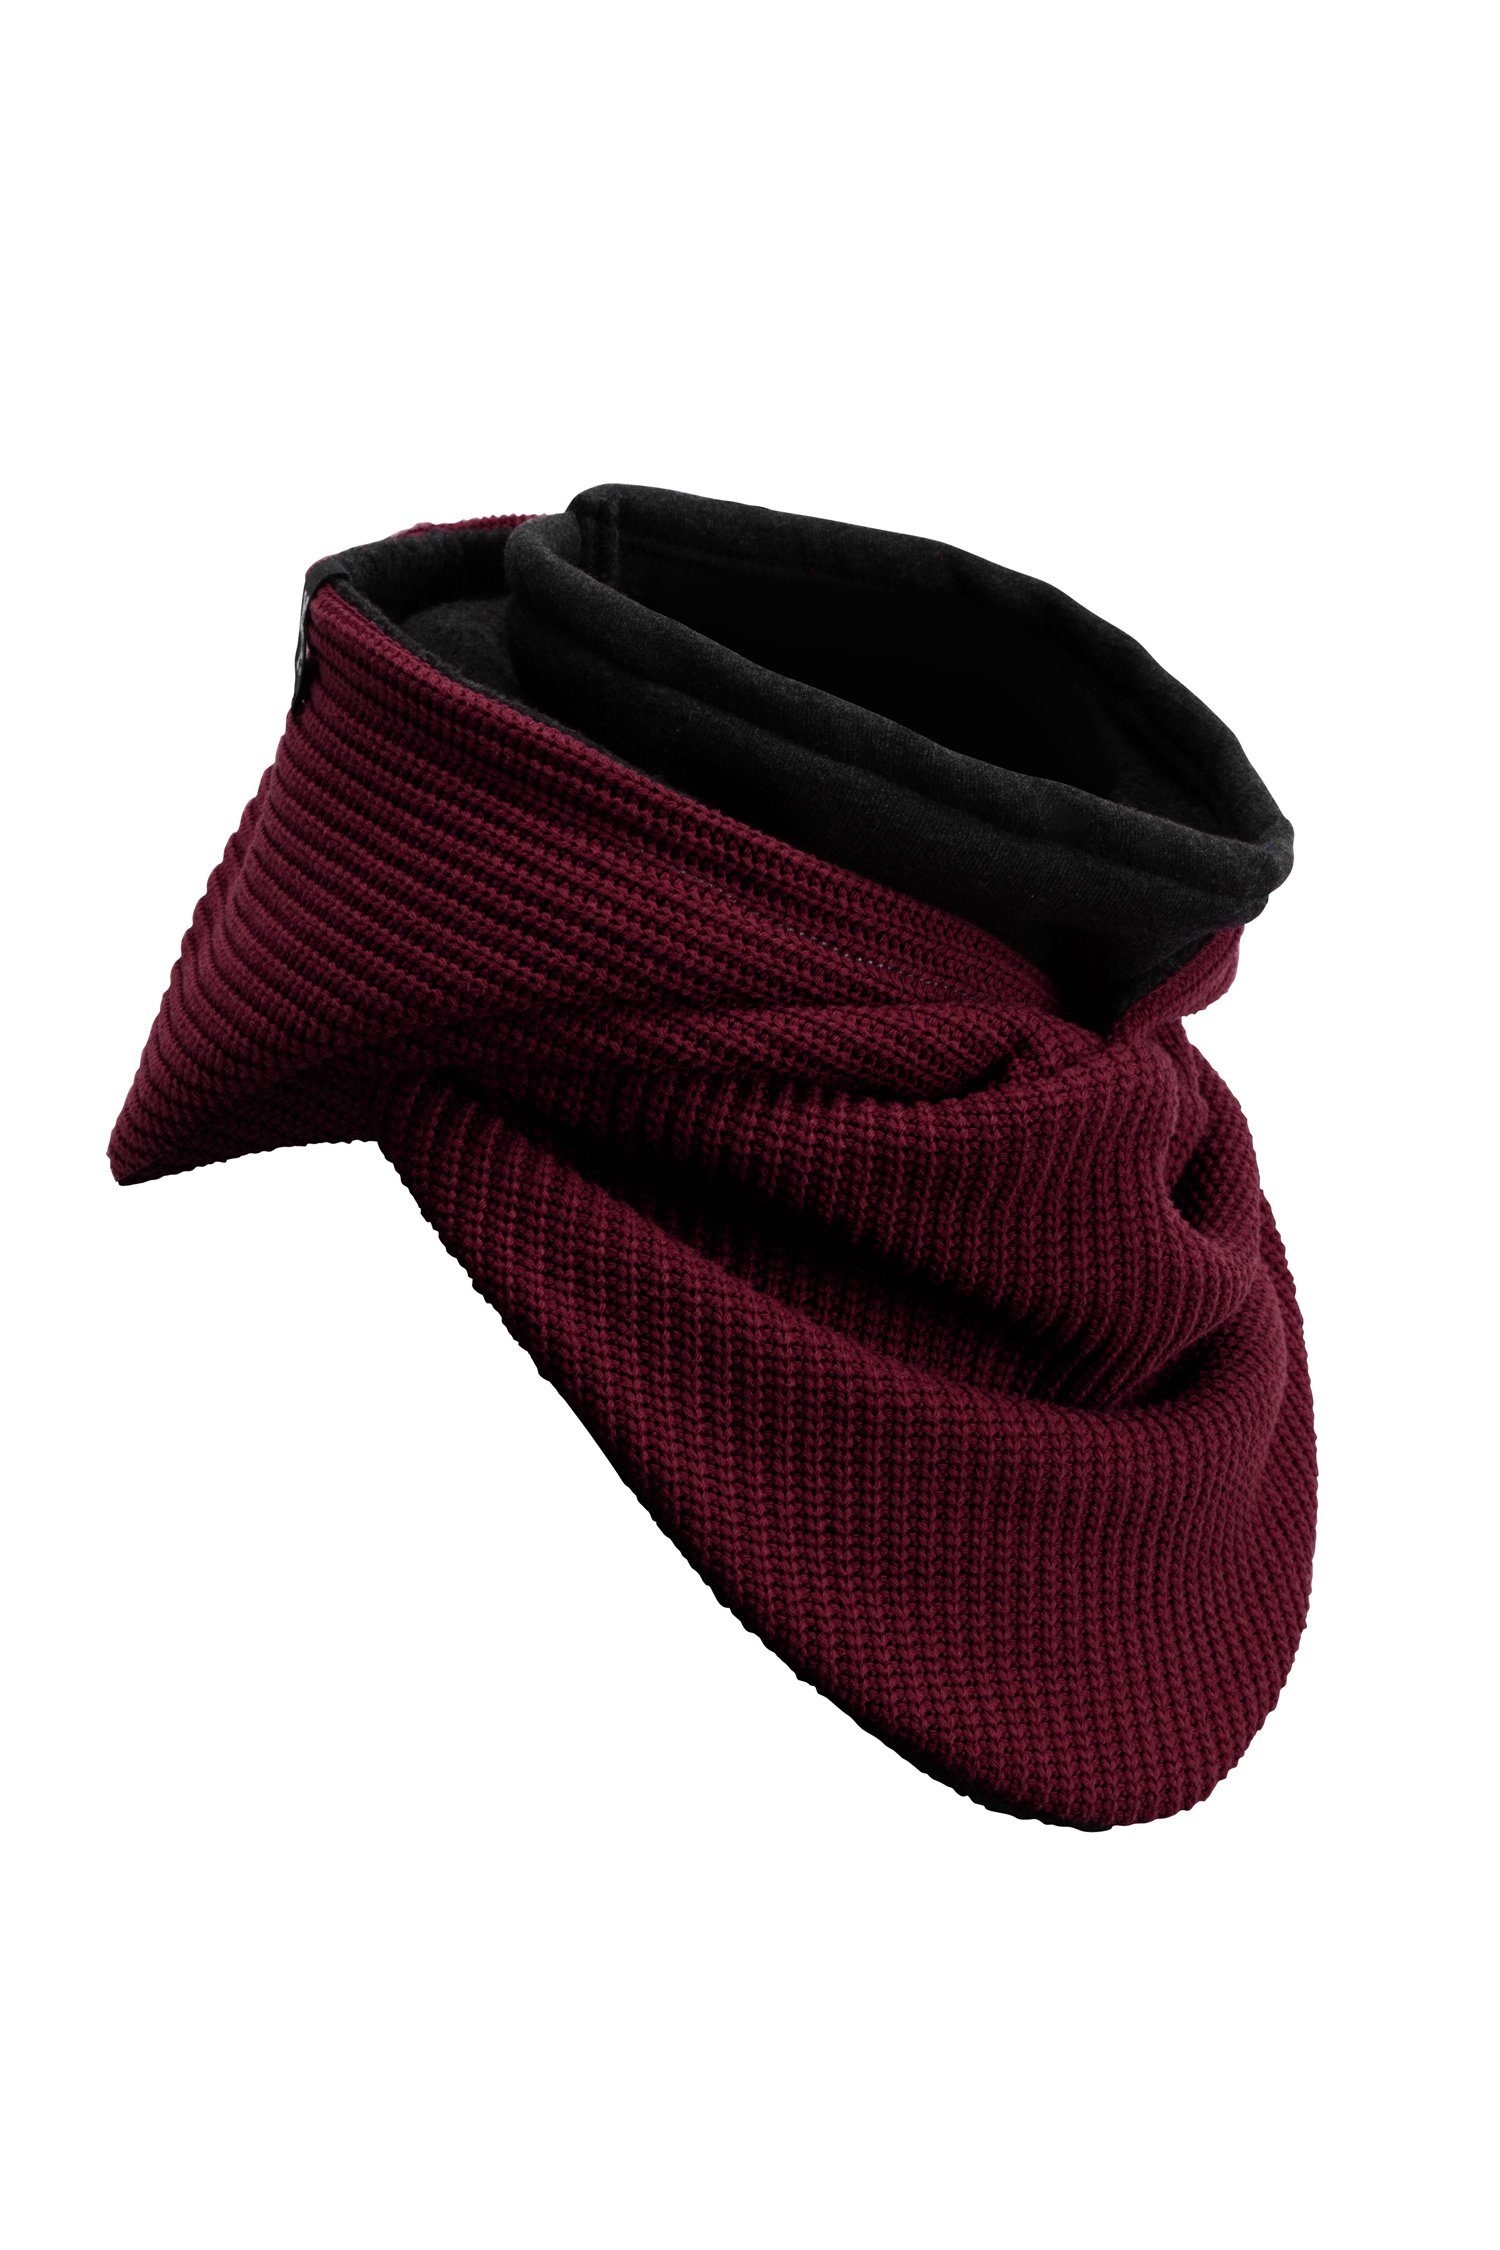 Manufaktur13 Modeschal Knit Hooded Loop - Kapuzenschal, Schal, Strickschal, mit integriertem Windbreaker